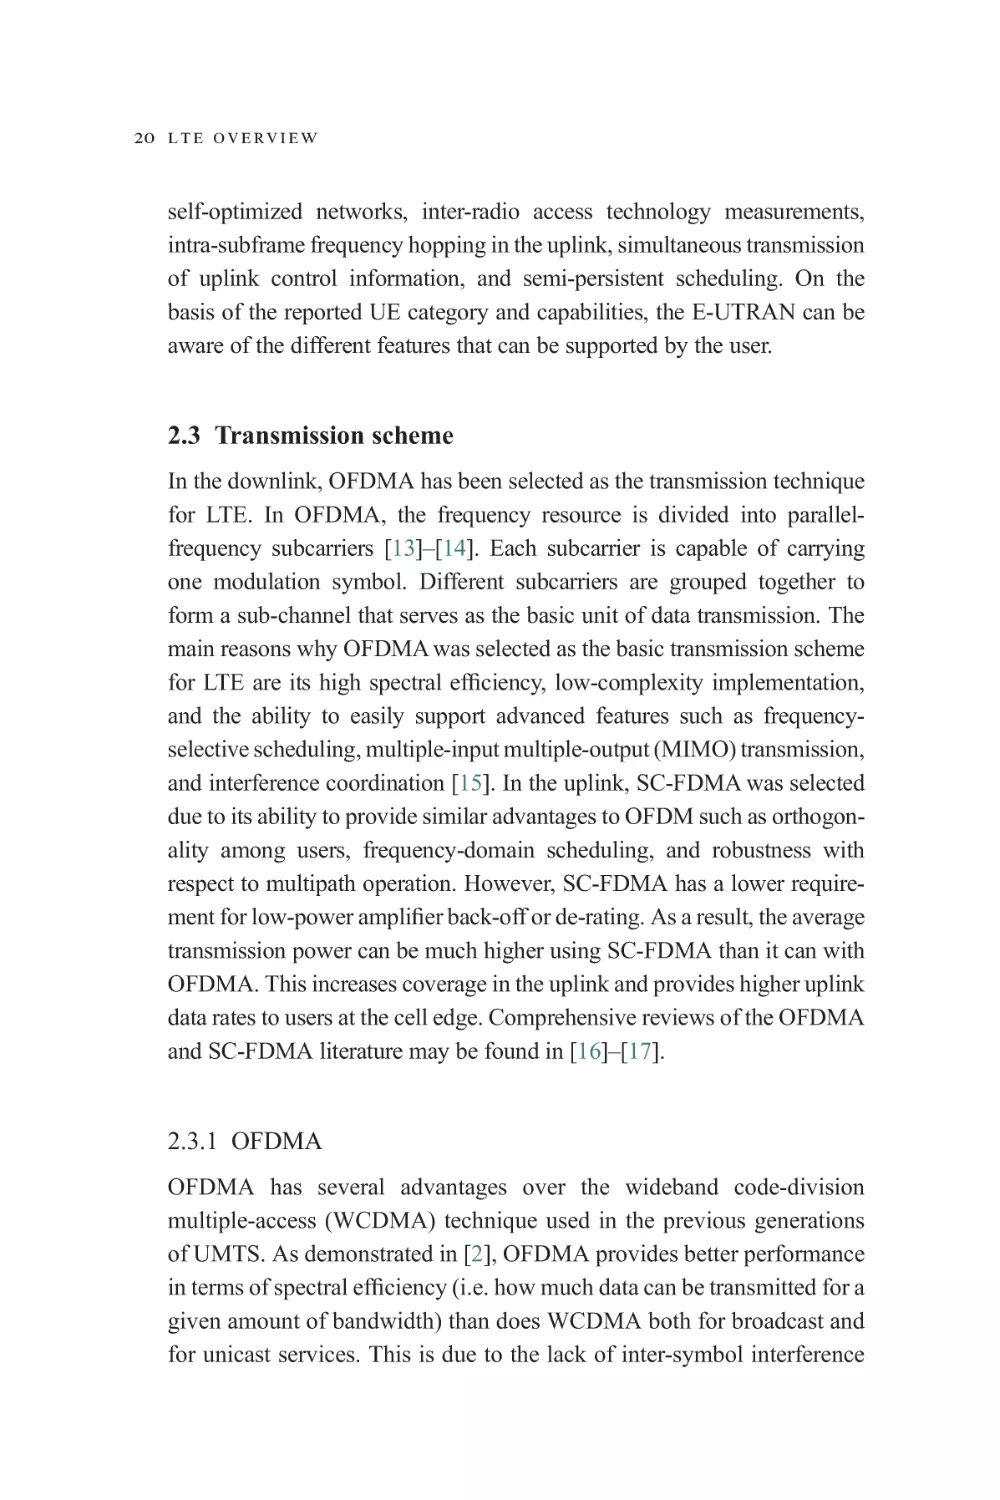 2.3 Transmission scheme
2.3.1 OFDMA